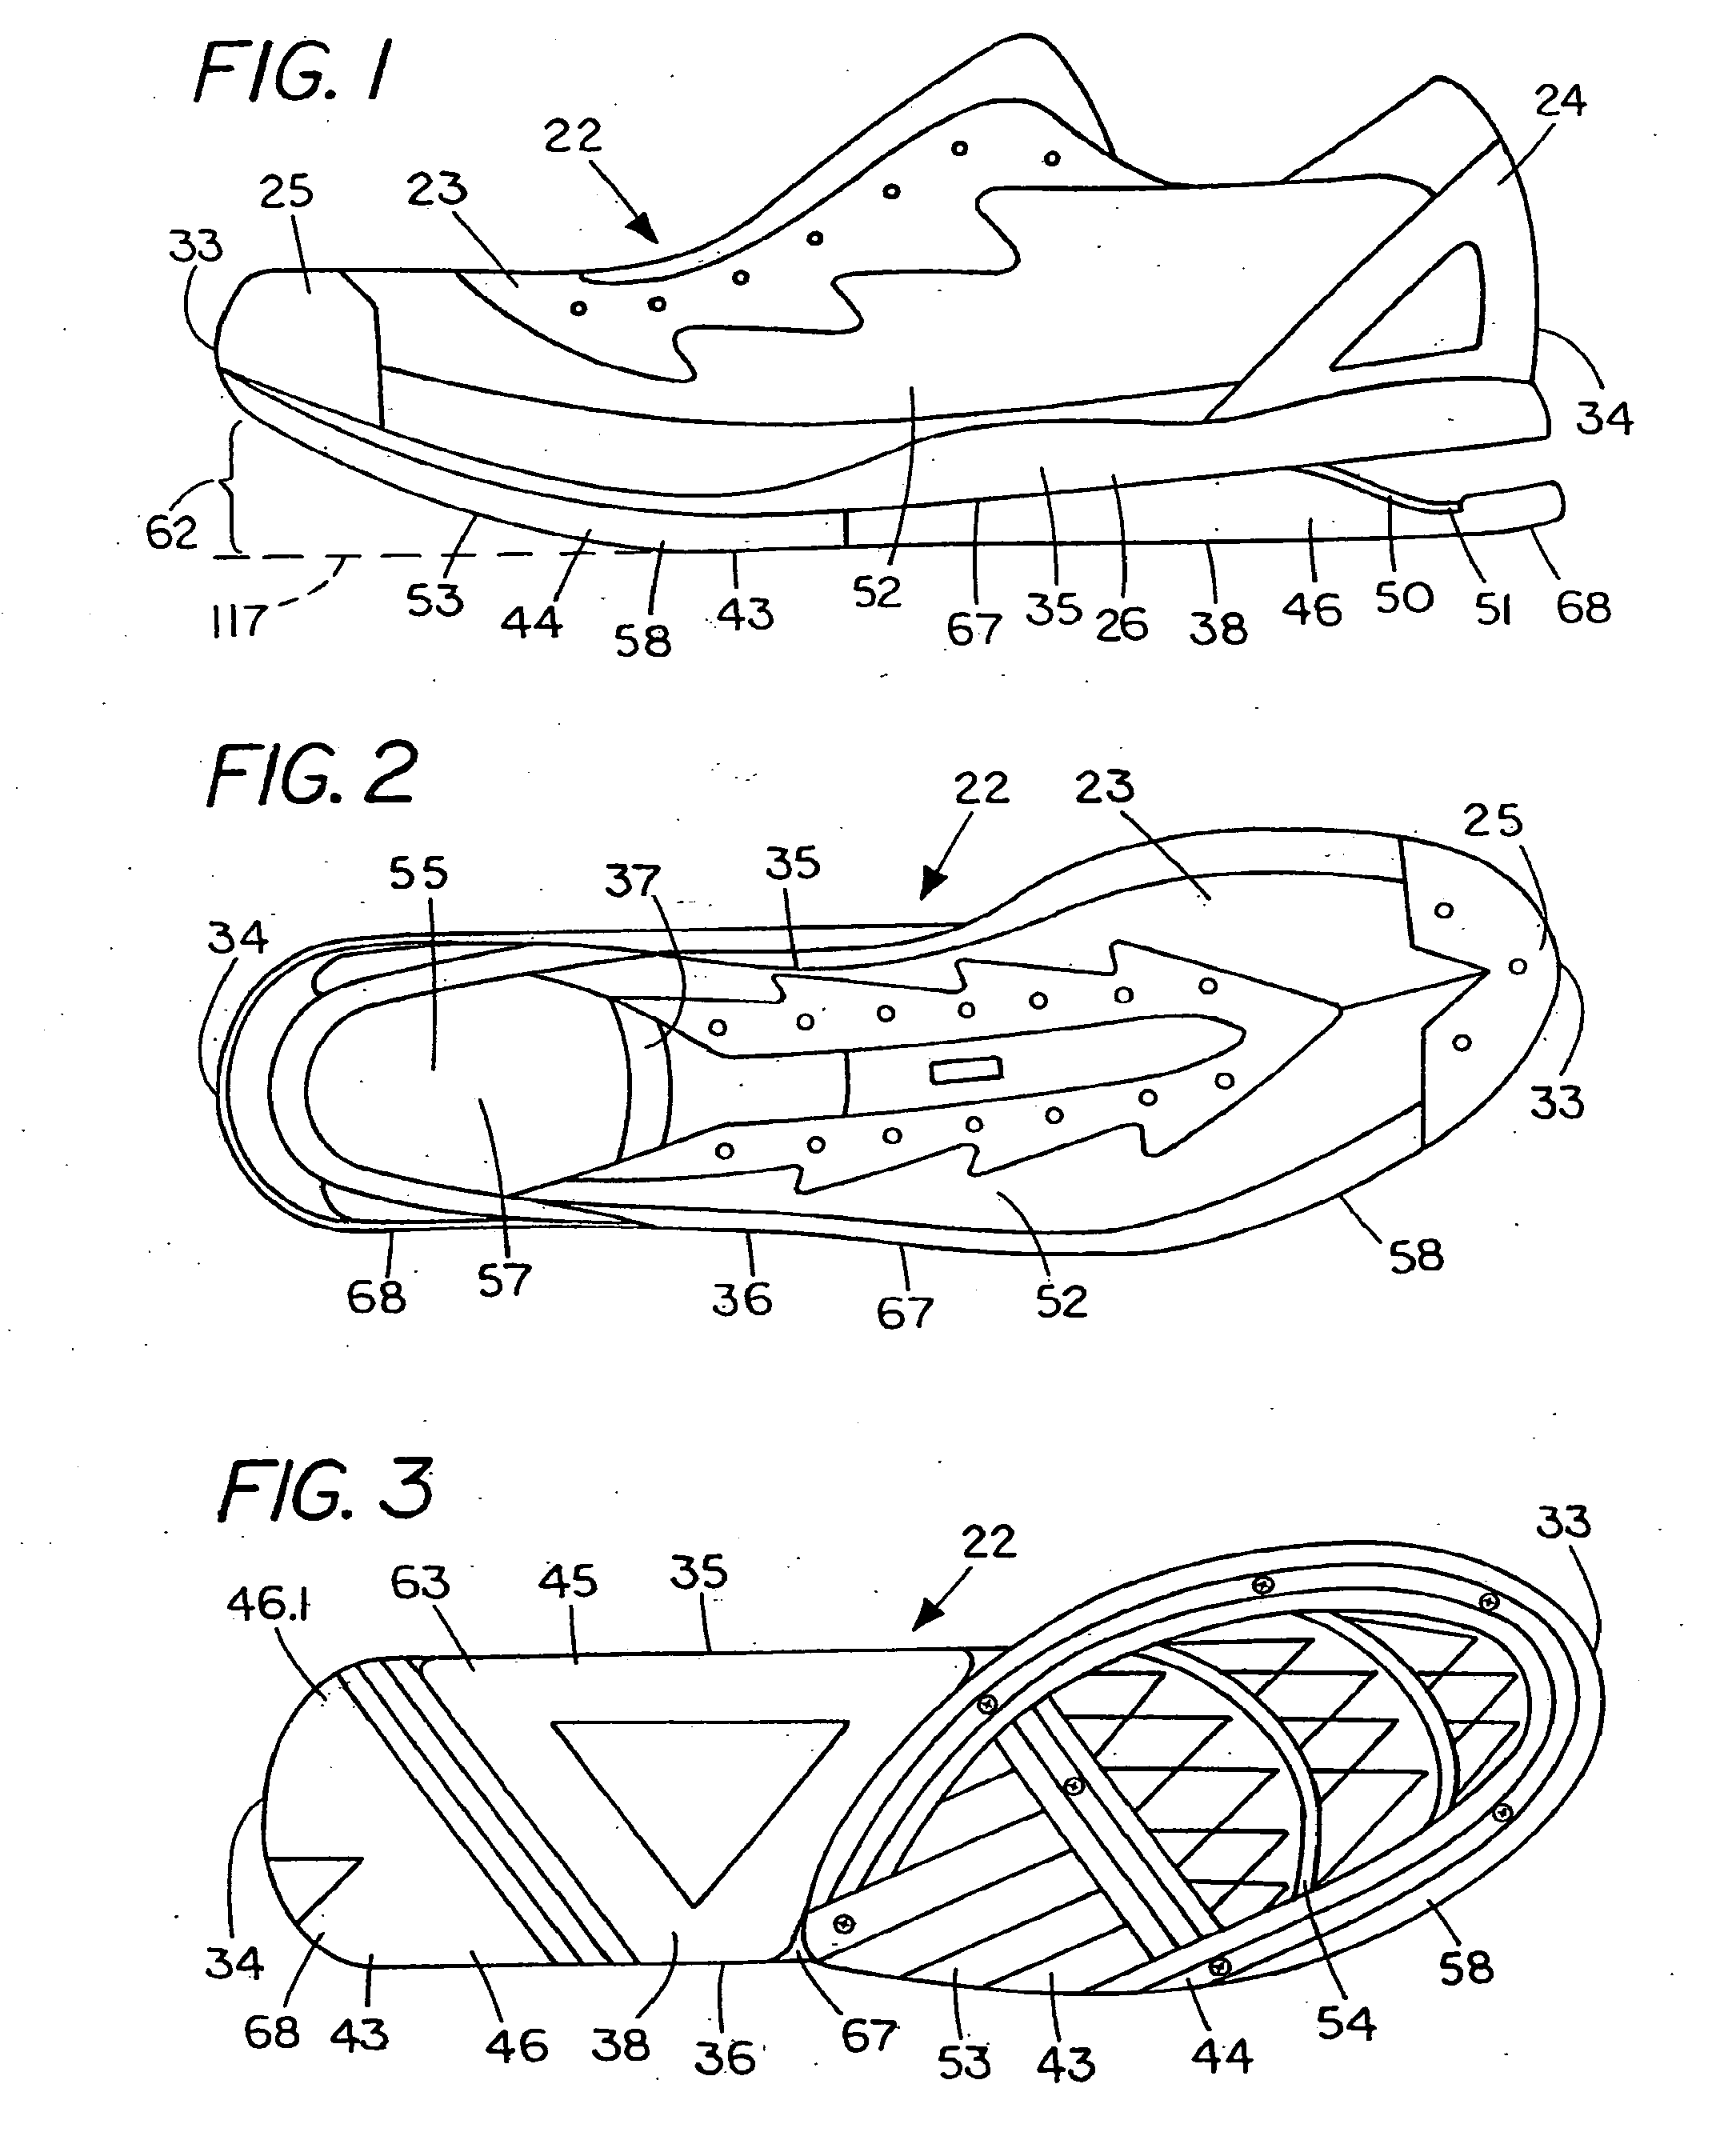 Custom article of footwear and method of making the same